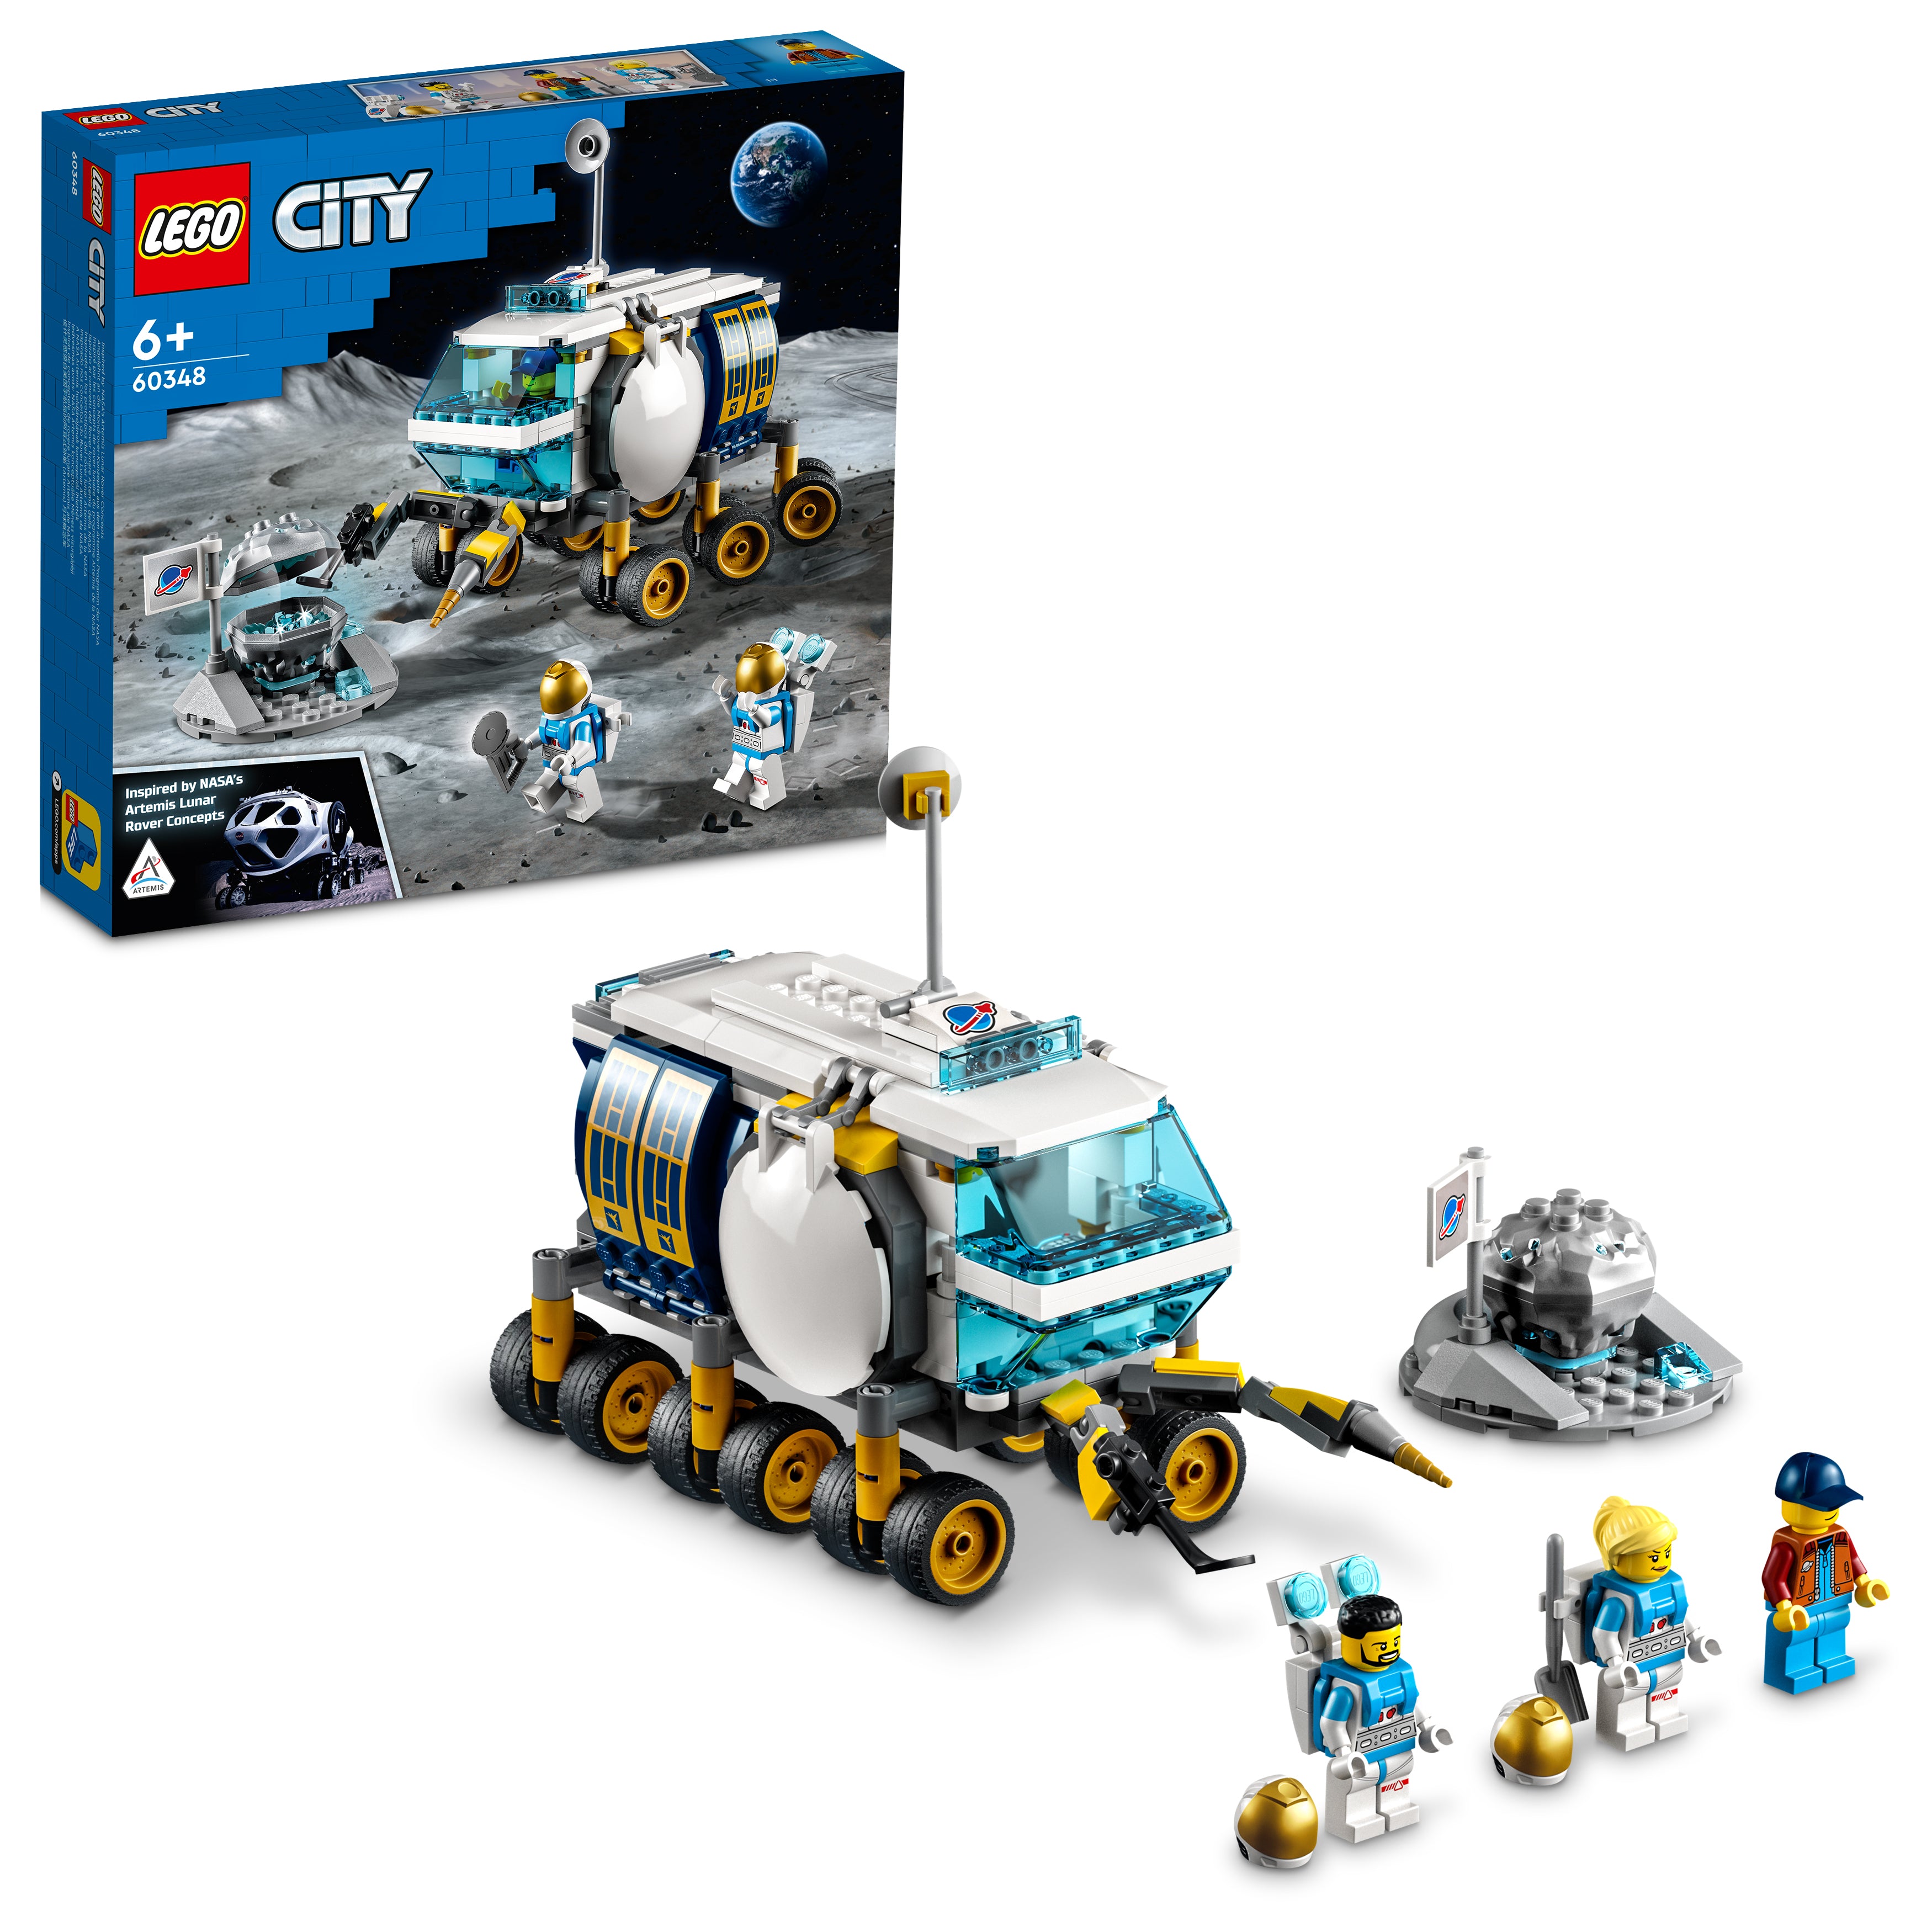 Lego 60348 Lunar Roving Vehicle